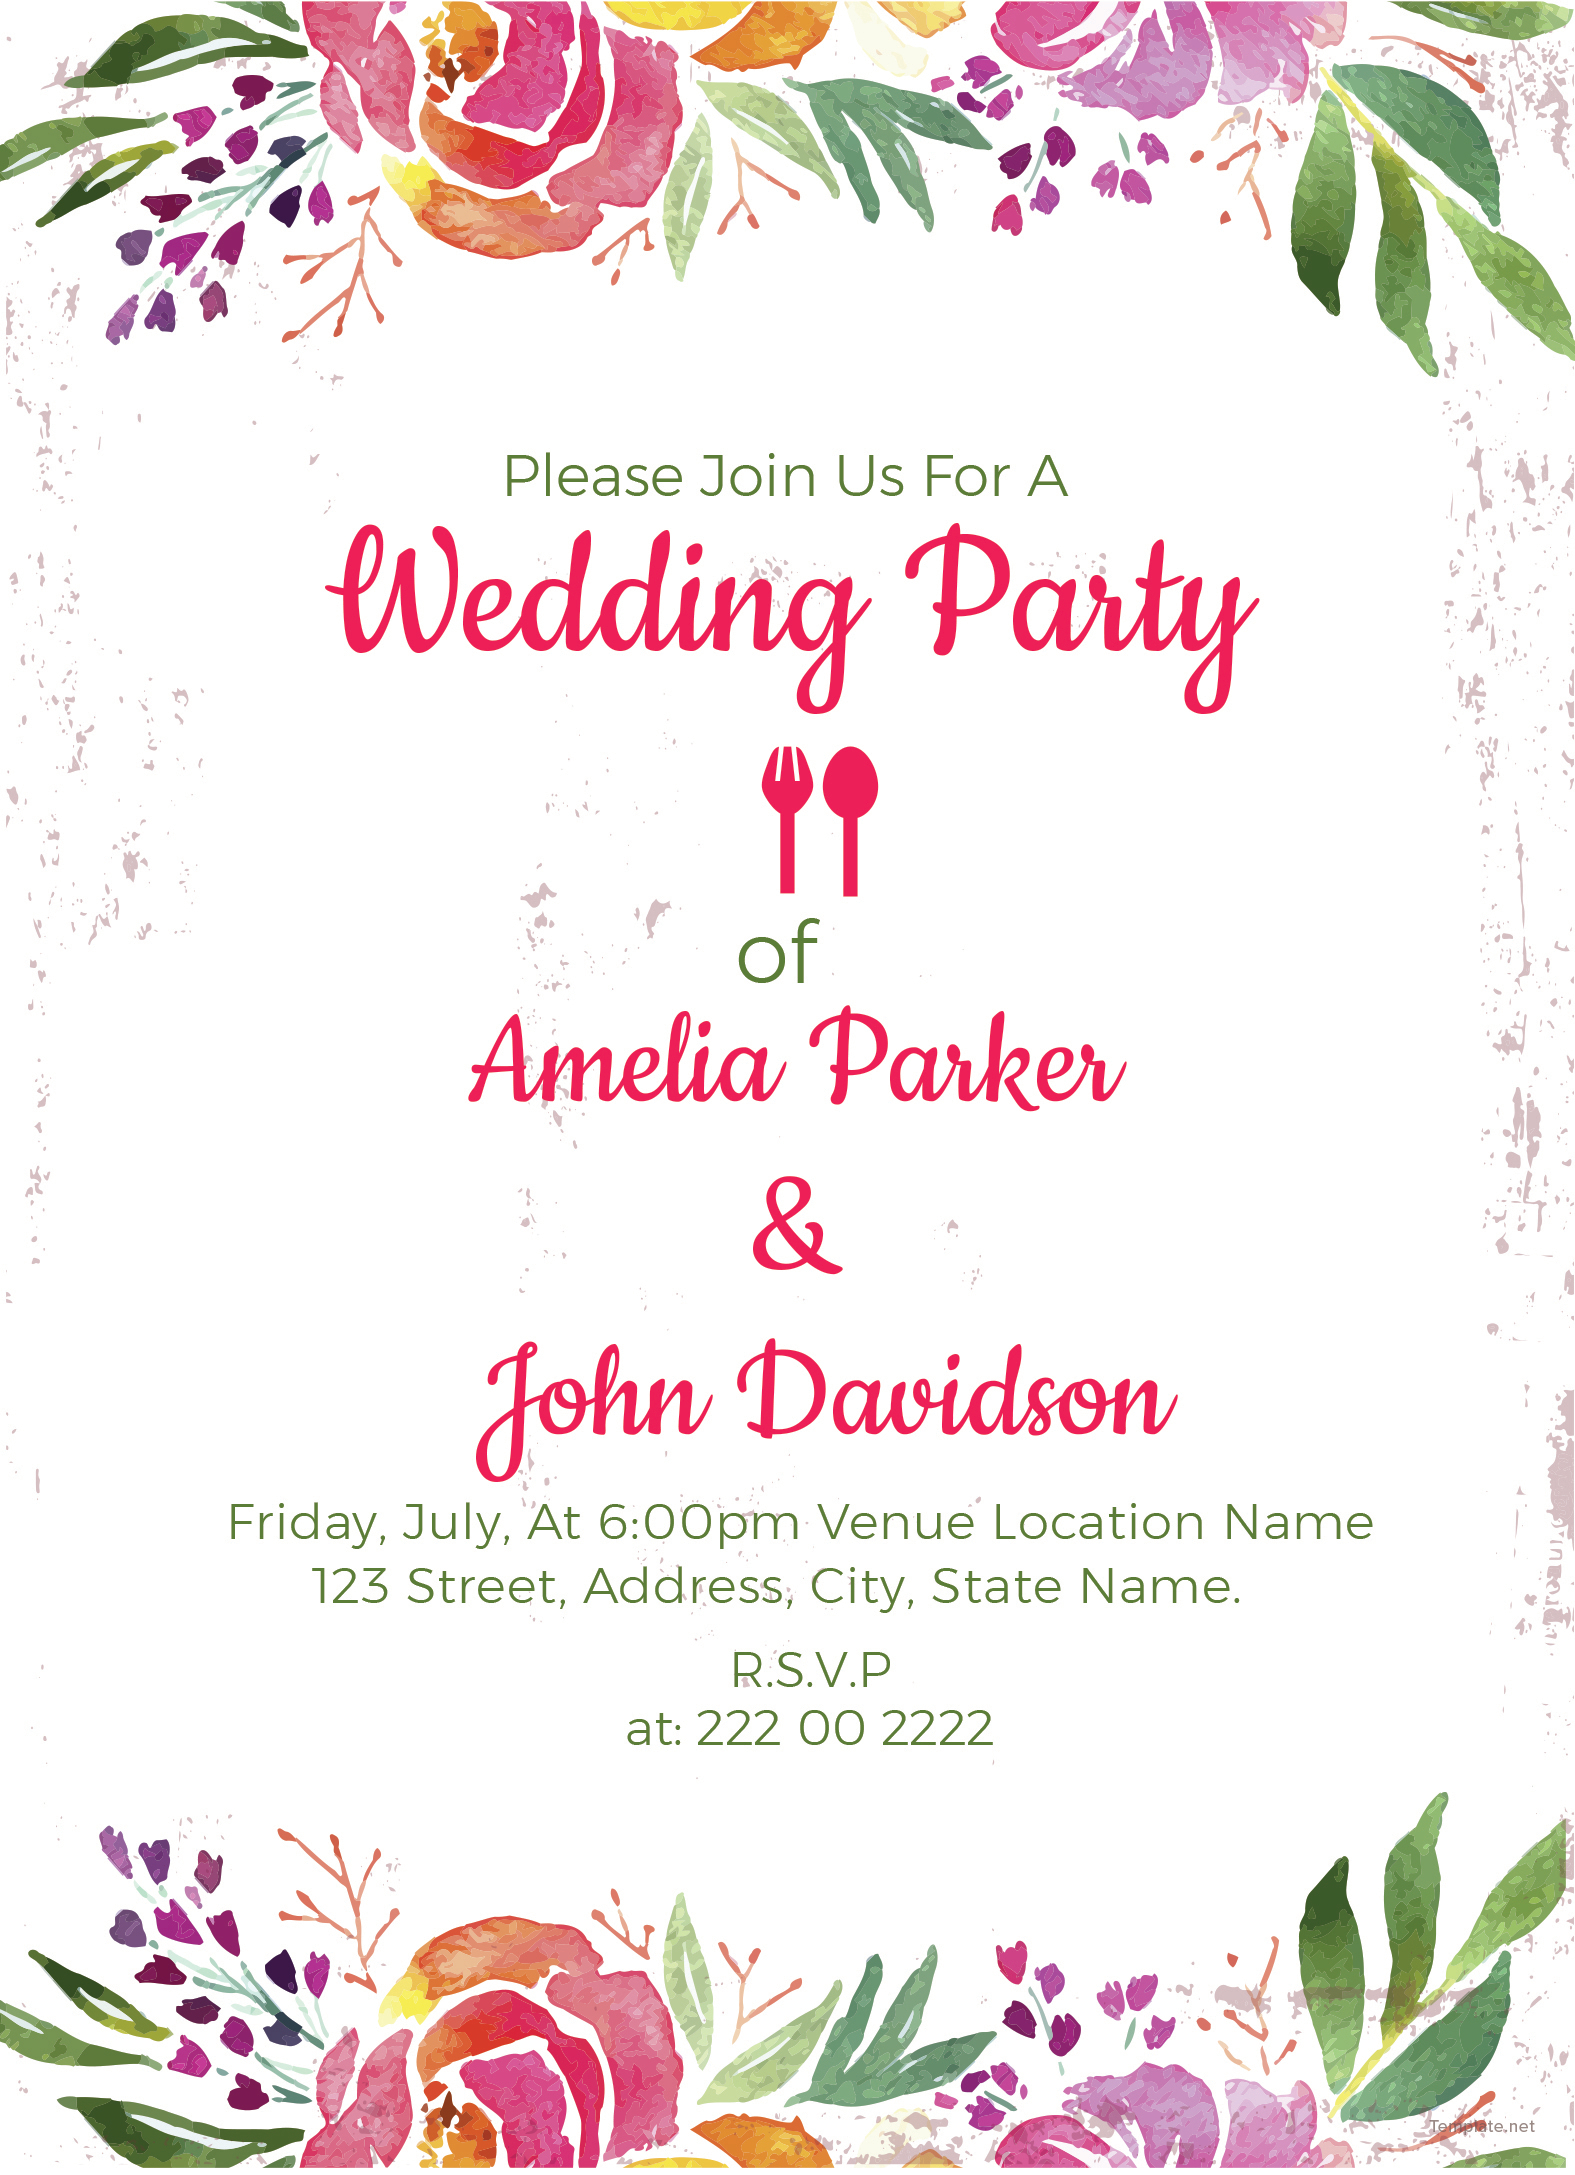 Free Wedding Party Invitation Template in Adobe Illustrator